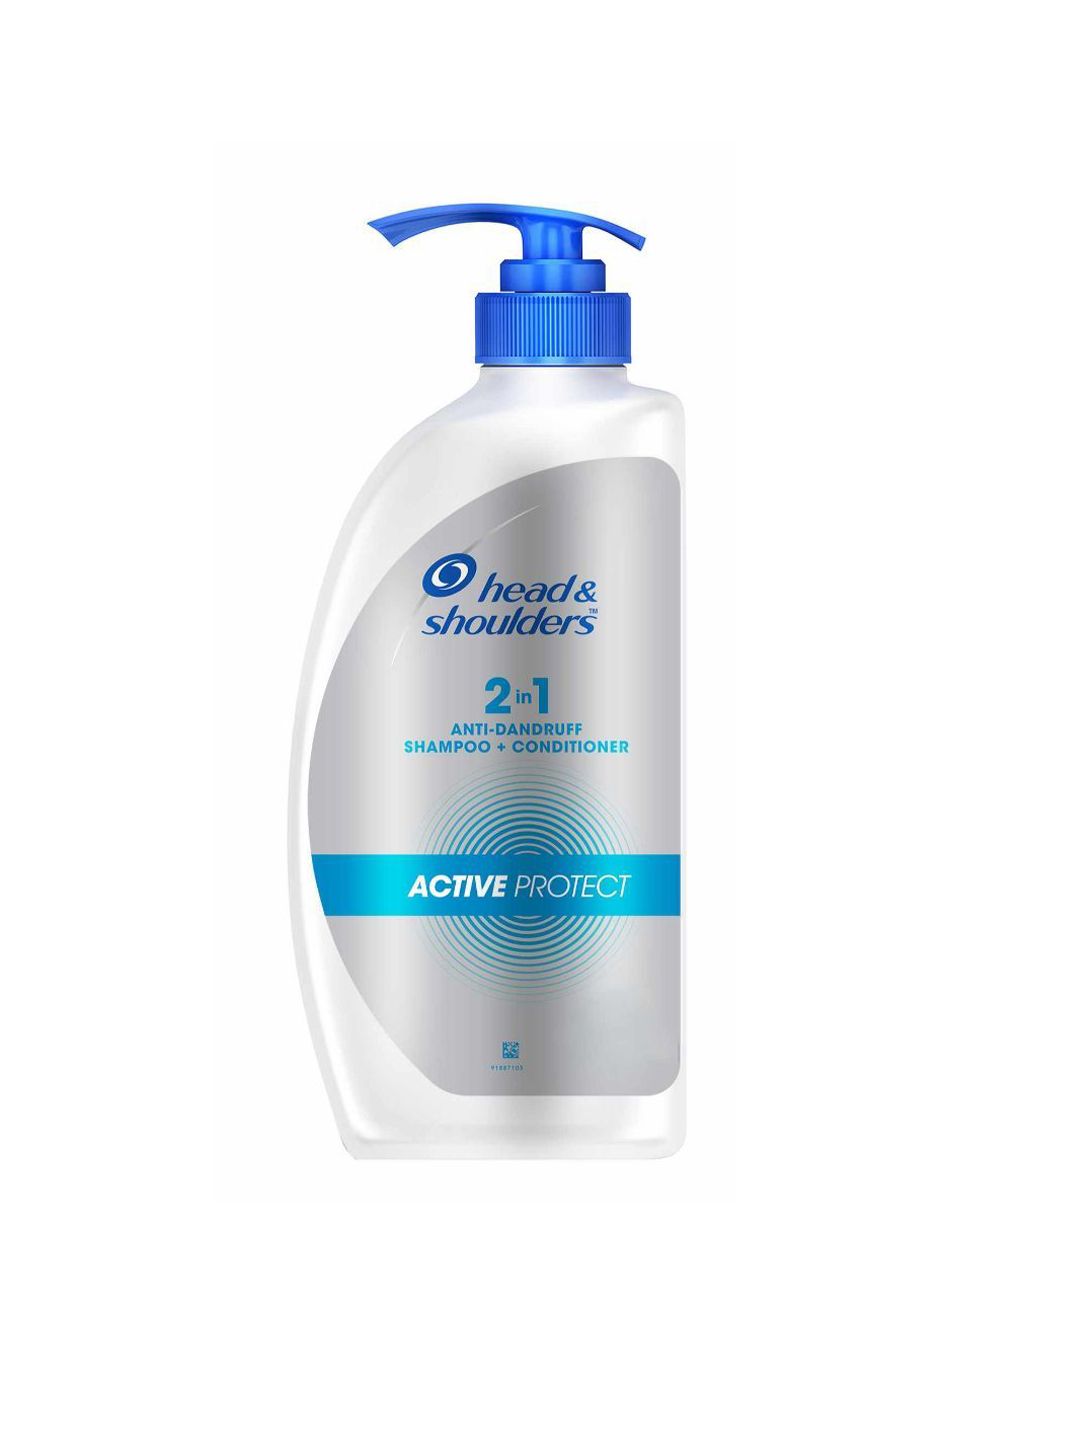 Head & Shoulders Unisex 2 in 1 Active Protect Anti-Dandruff Shampoo + Conditioner 650 ml Price in India